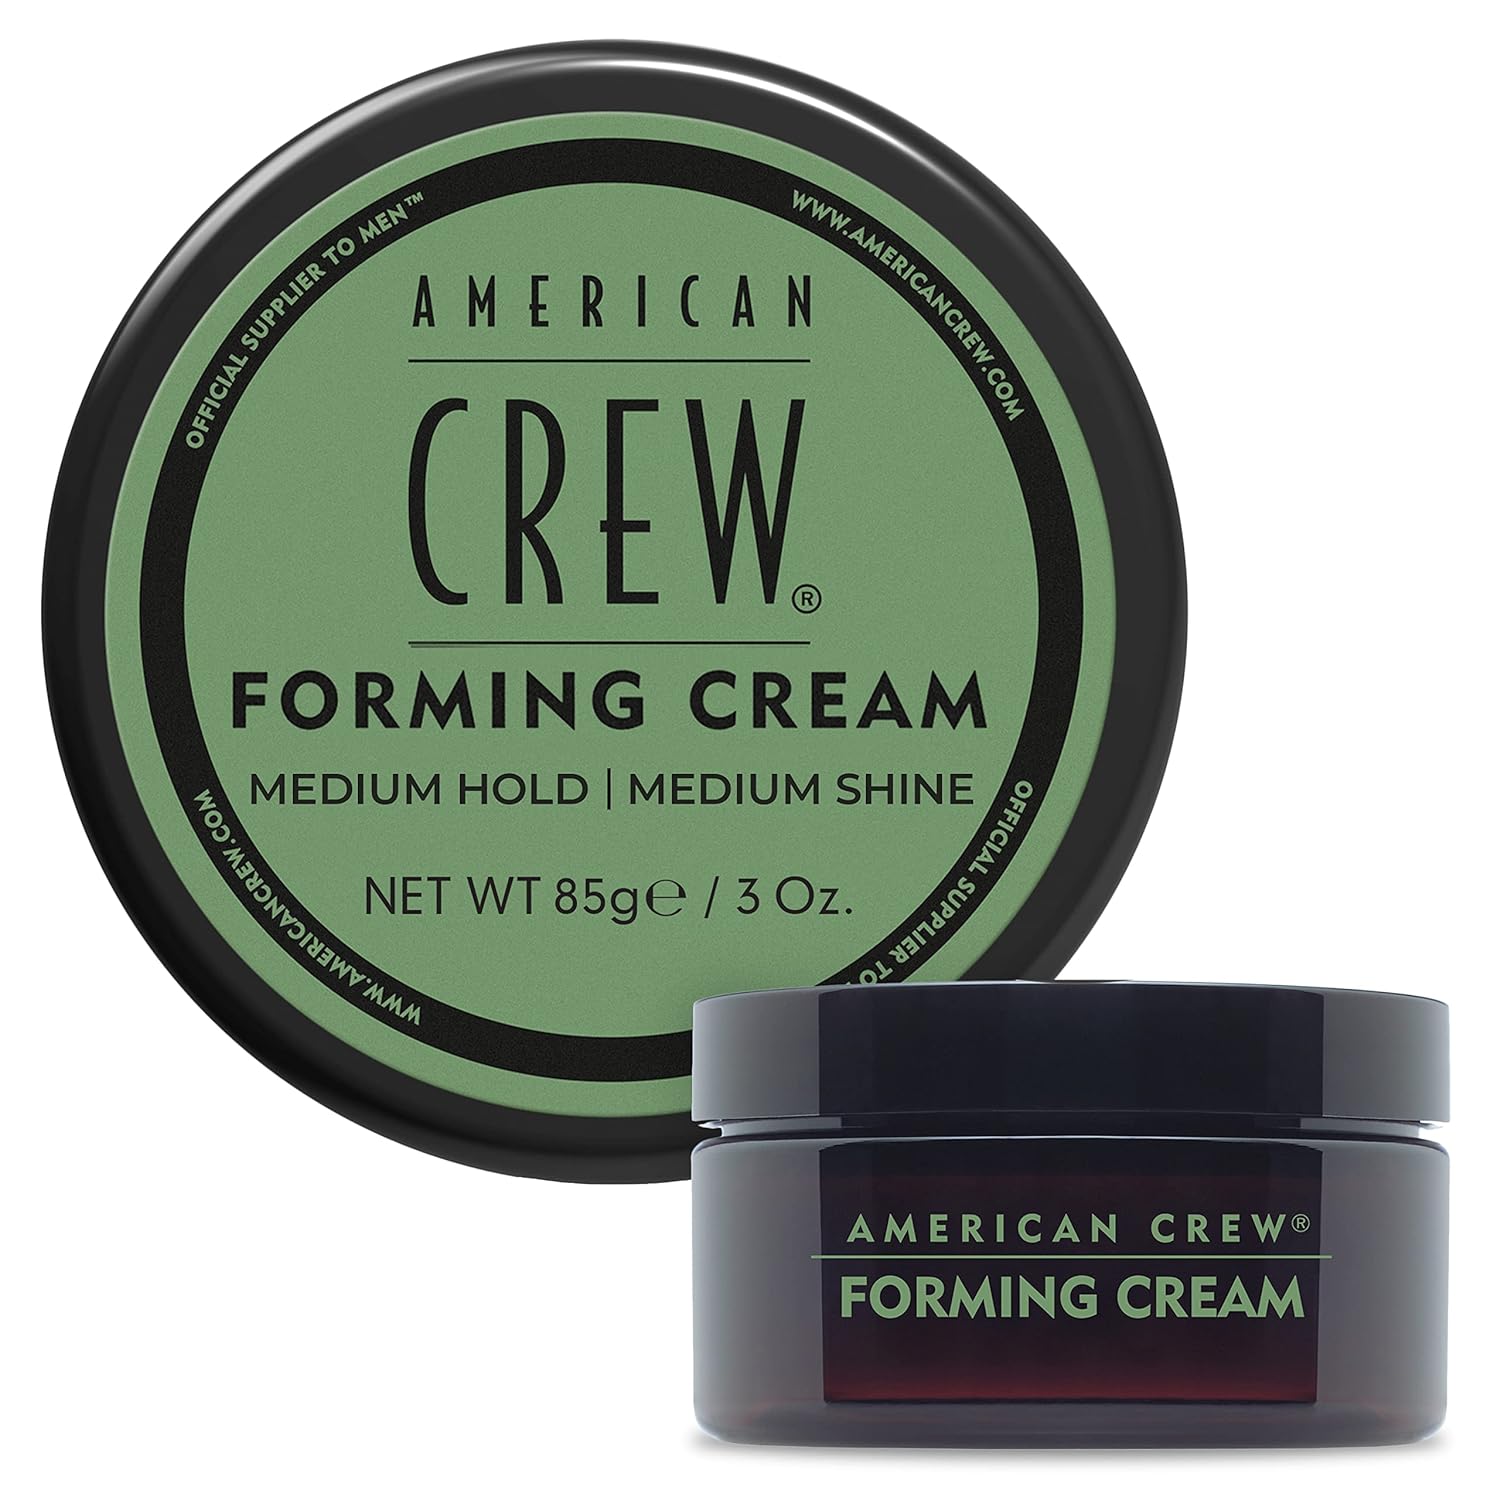 American Crew Mens Hair Forming Cream, Like Hair Gel with Medium Hold  Medium Shine, 3 Oz (Pack of 1)